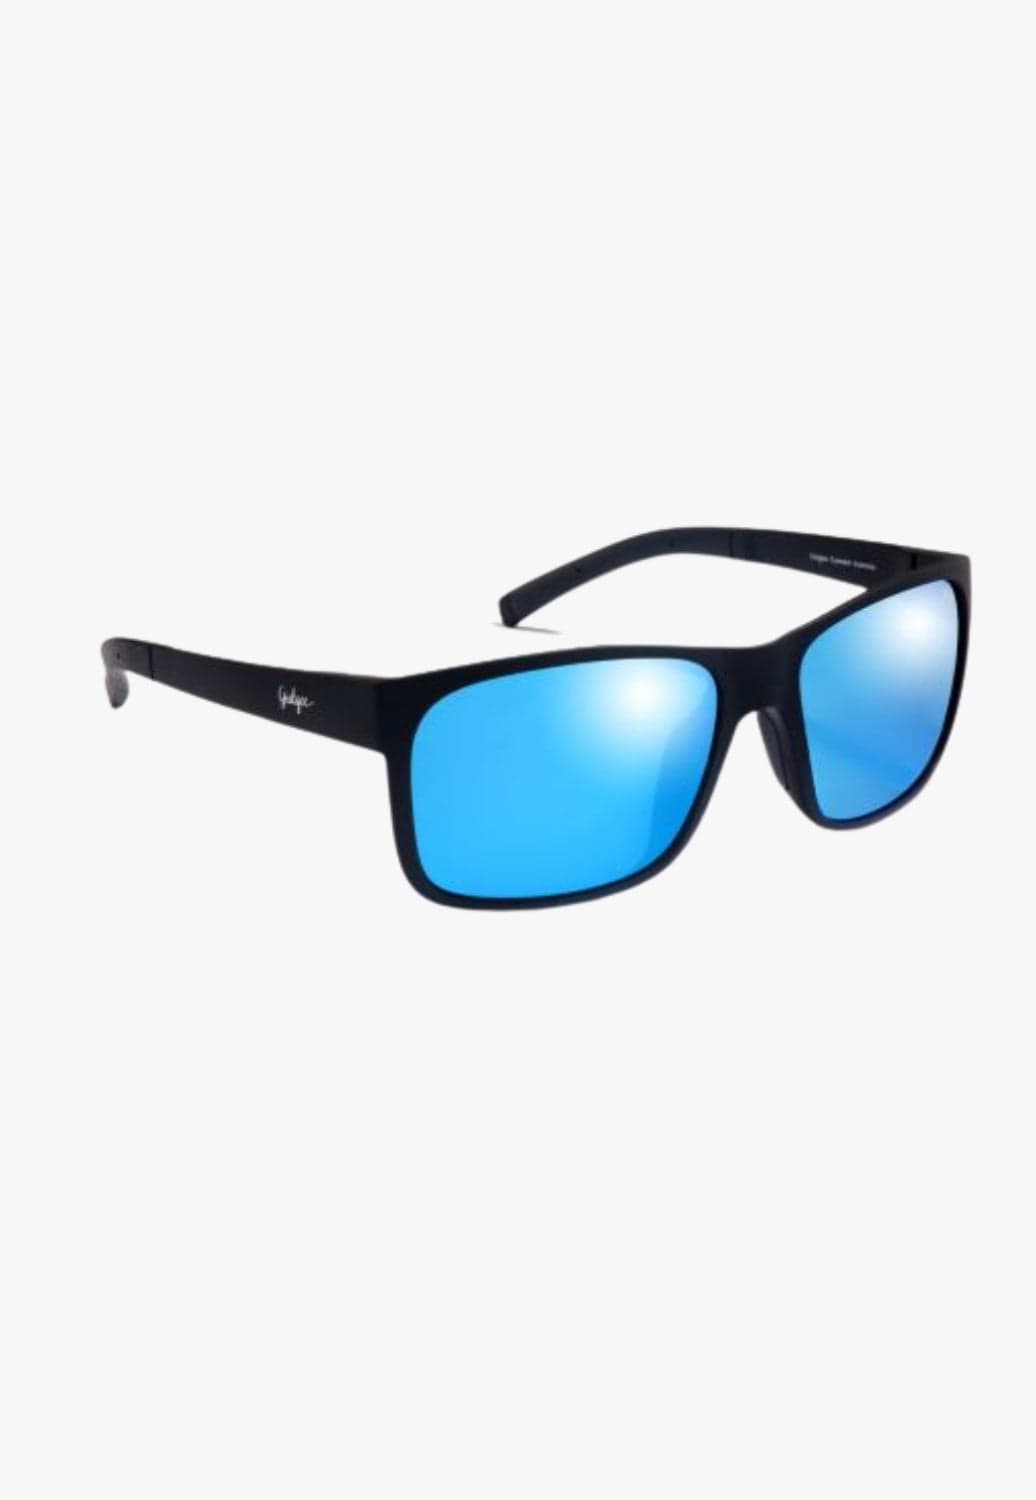 Gidgee Eyes ACCESSORIES-Sunglasses OSFA / Blue Gidgee Eyes Mustang Sunglasses